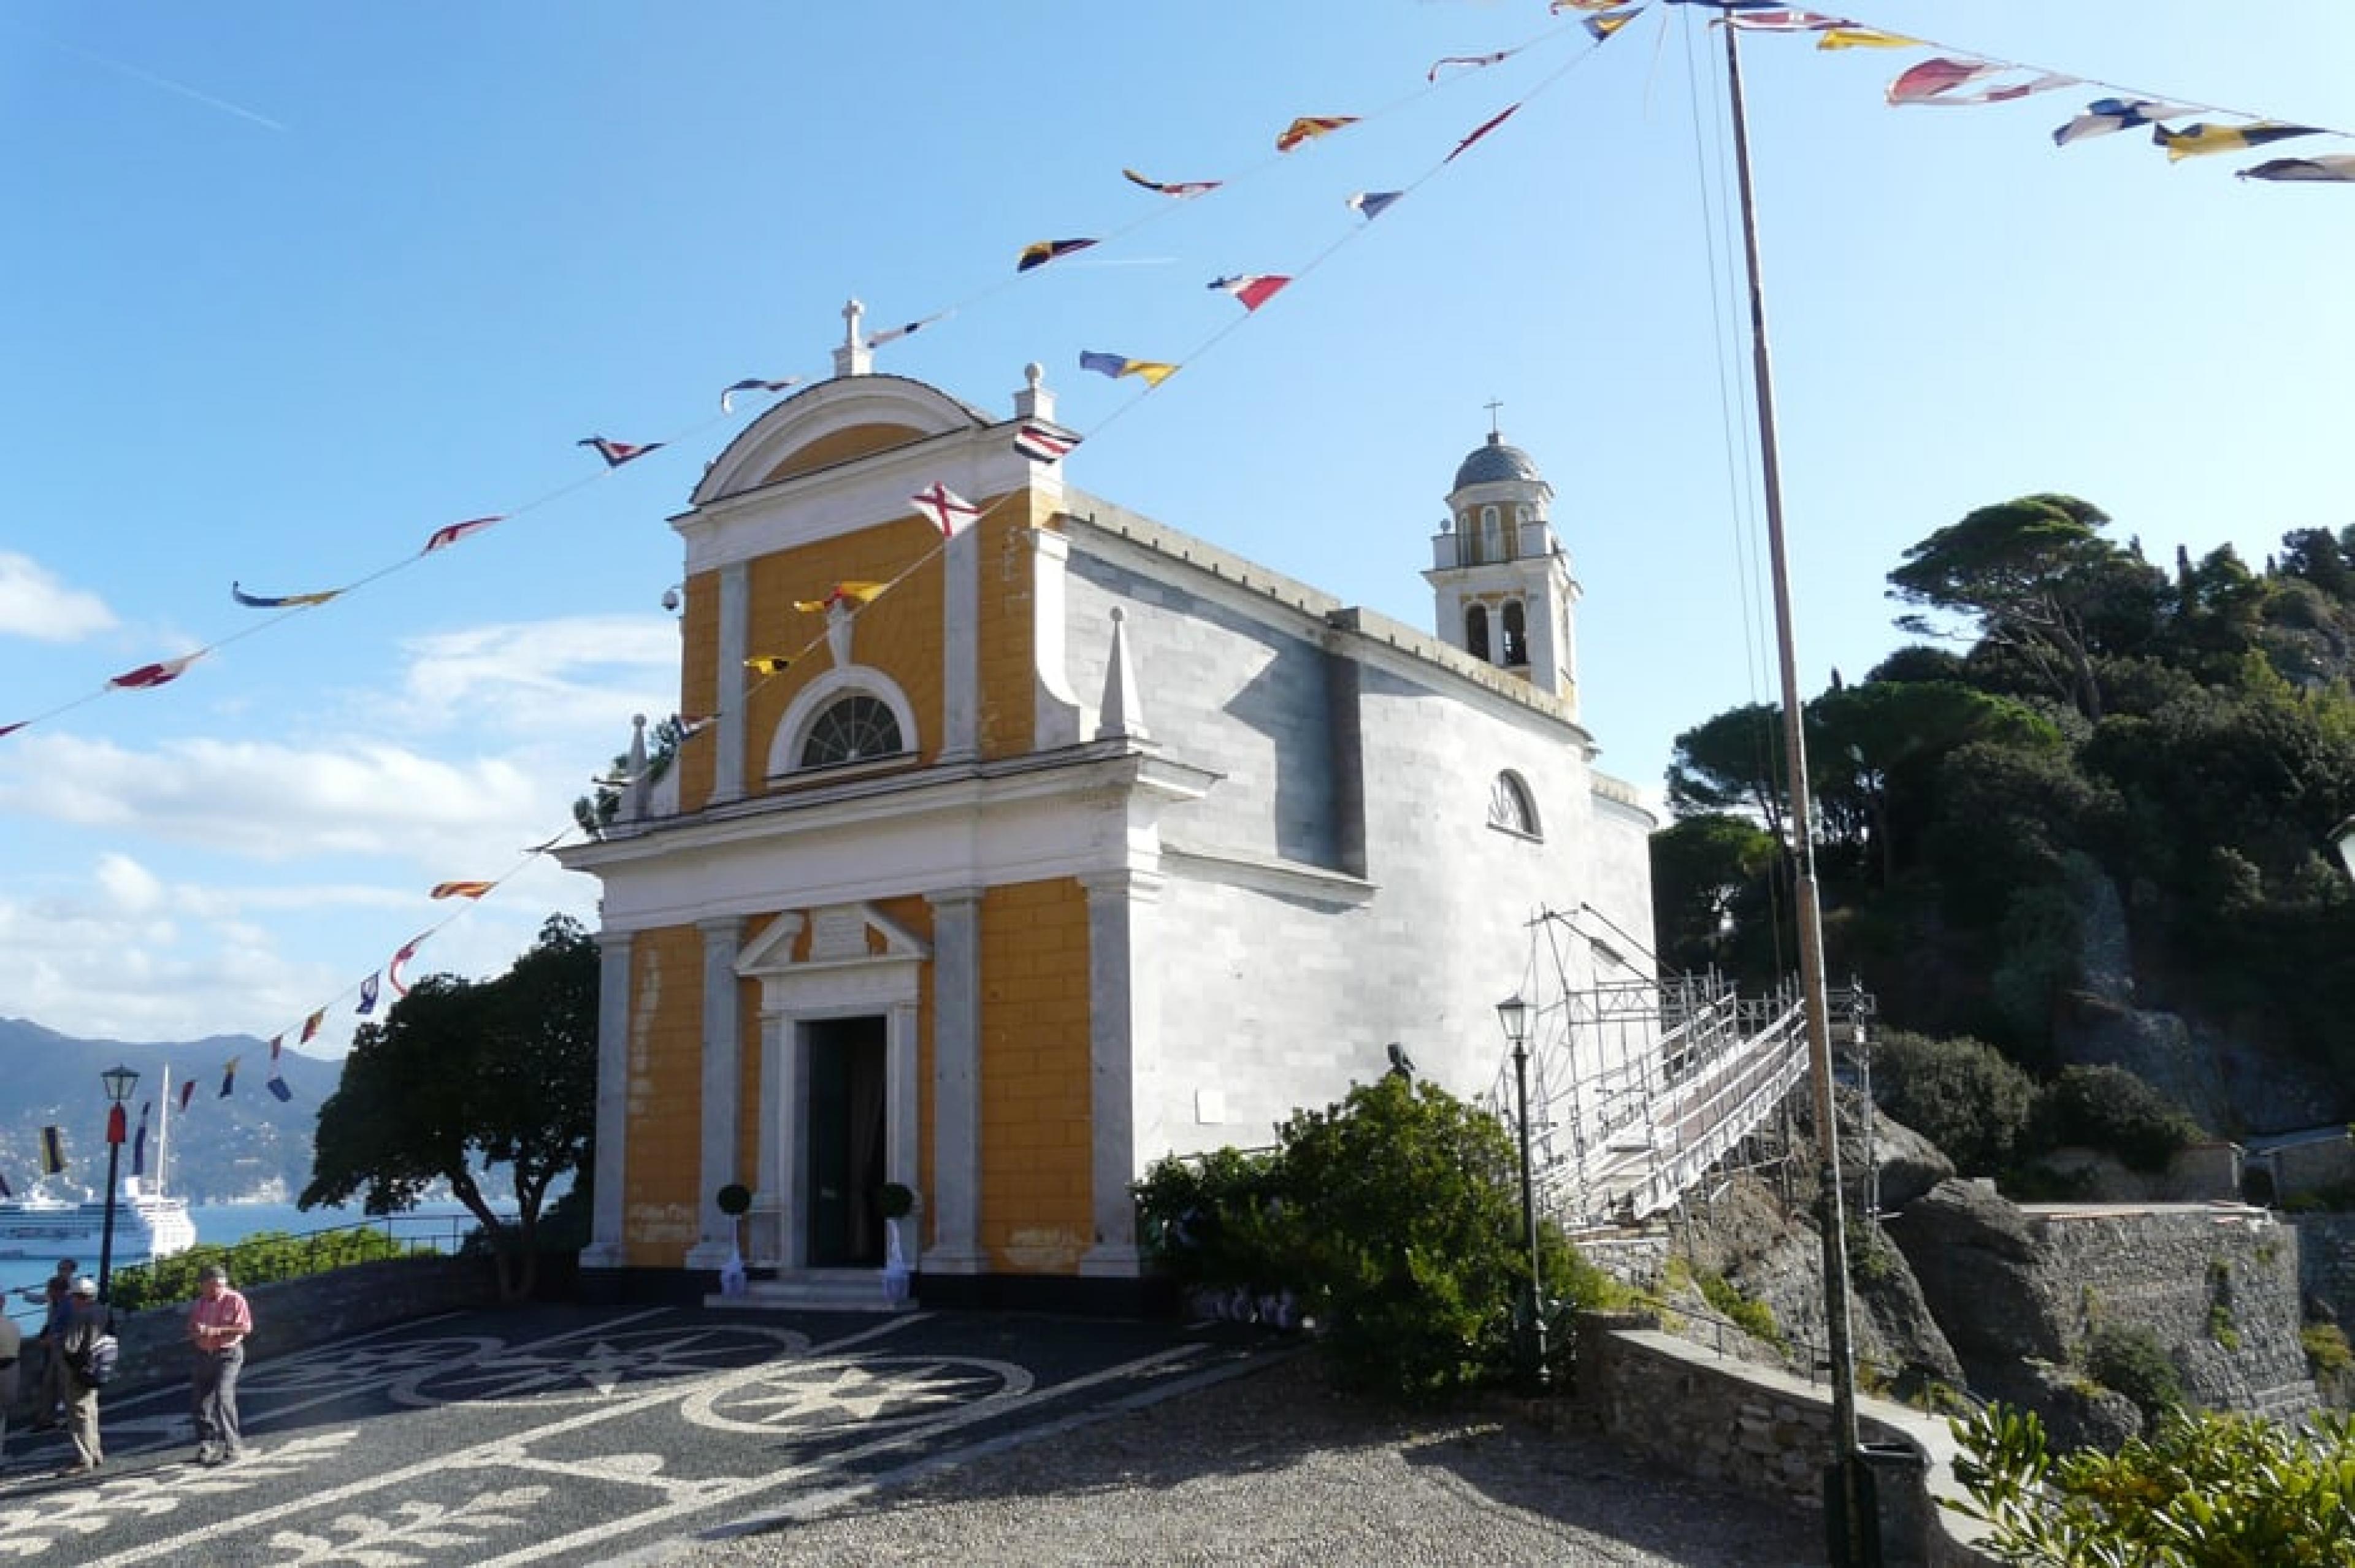 Church at Church of San Giorgio , Portofino, Italy - Courtesy Davide Papalini